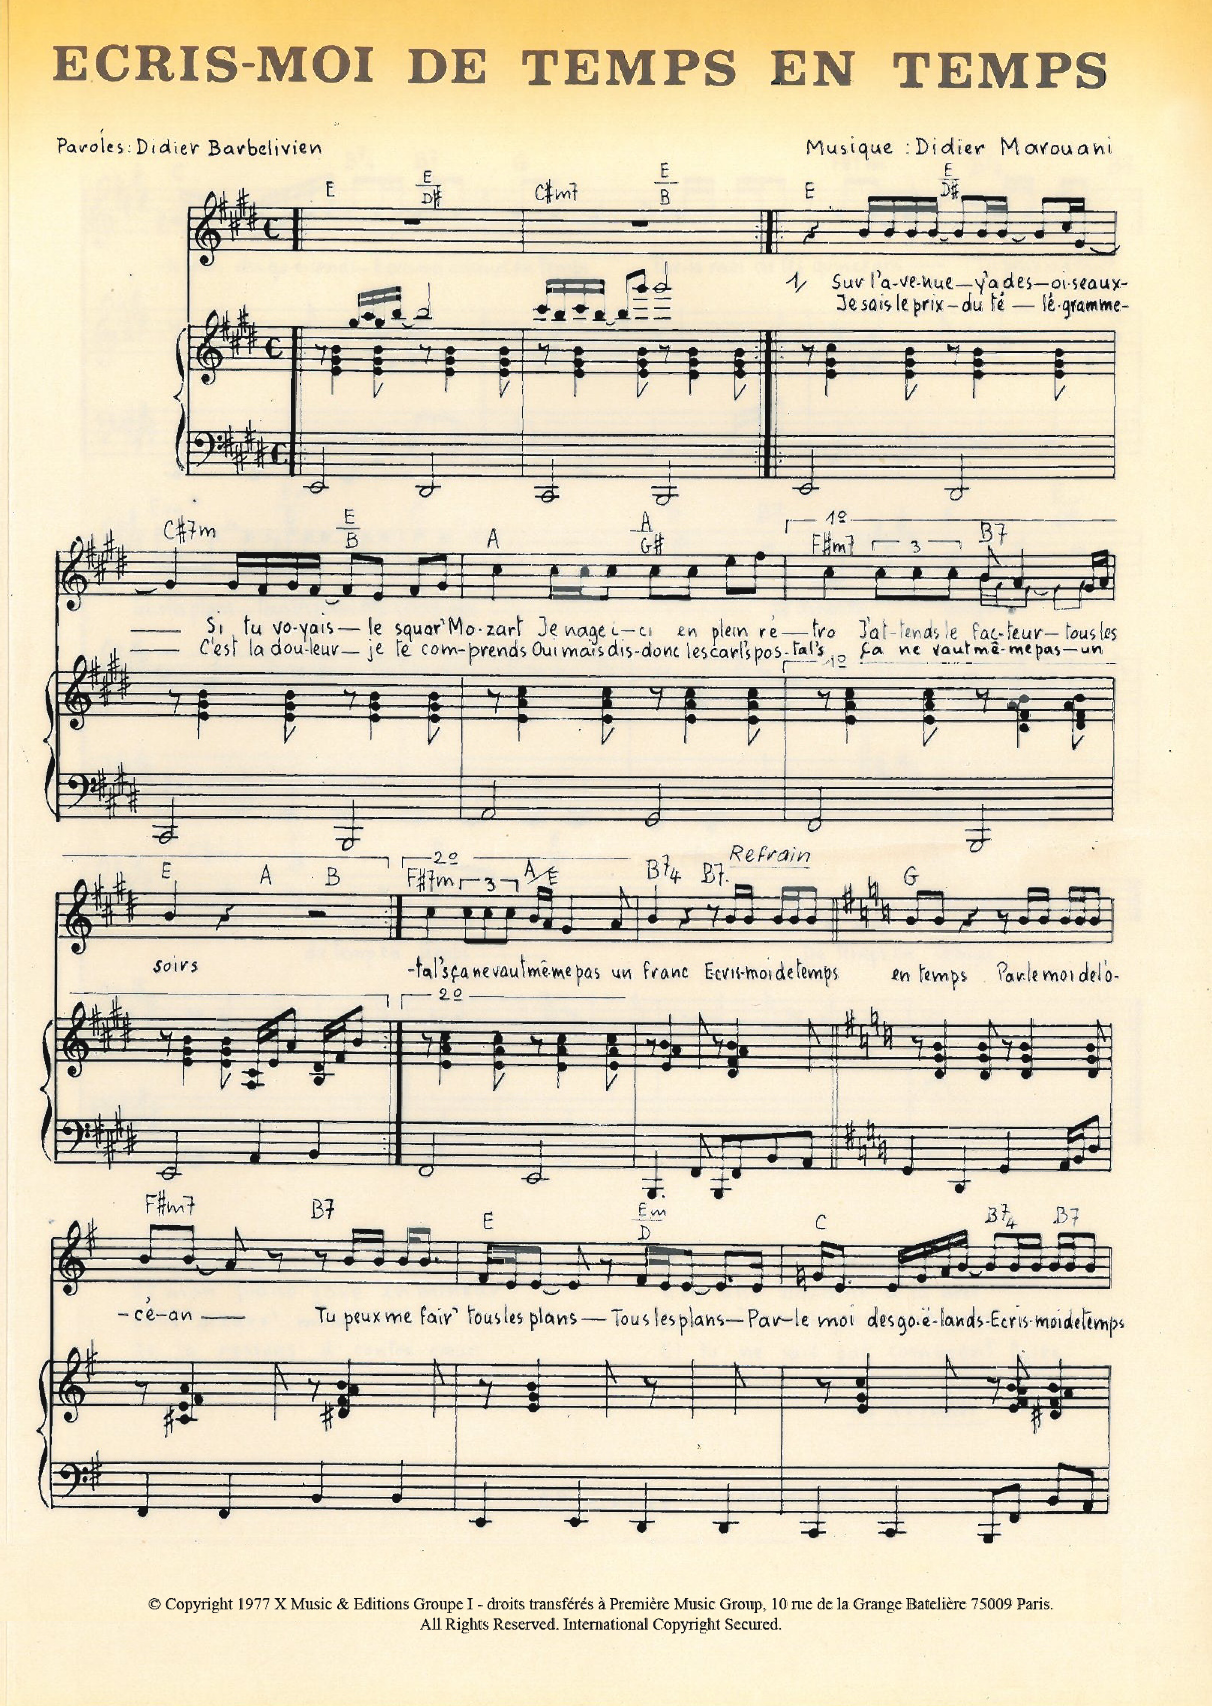 Didier Marouani Ecris Moi De Temps En Temps Sheet Music Notes & Chords for Piano & Vocal - Download or Print PDF